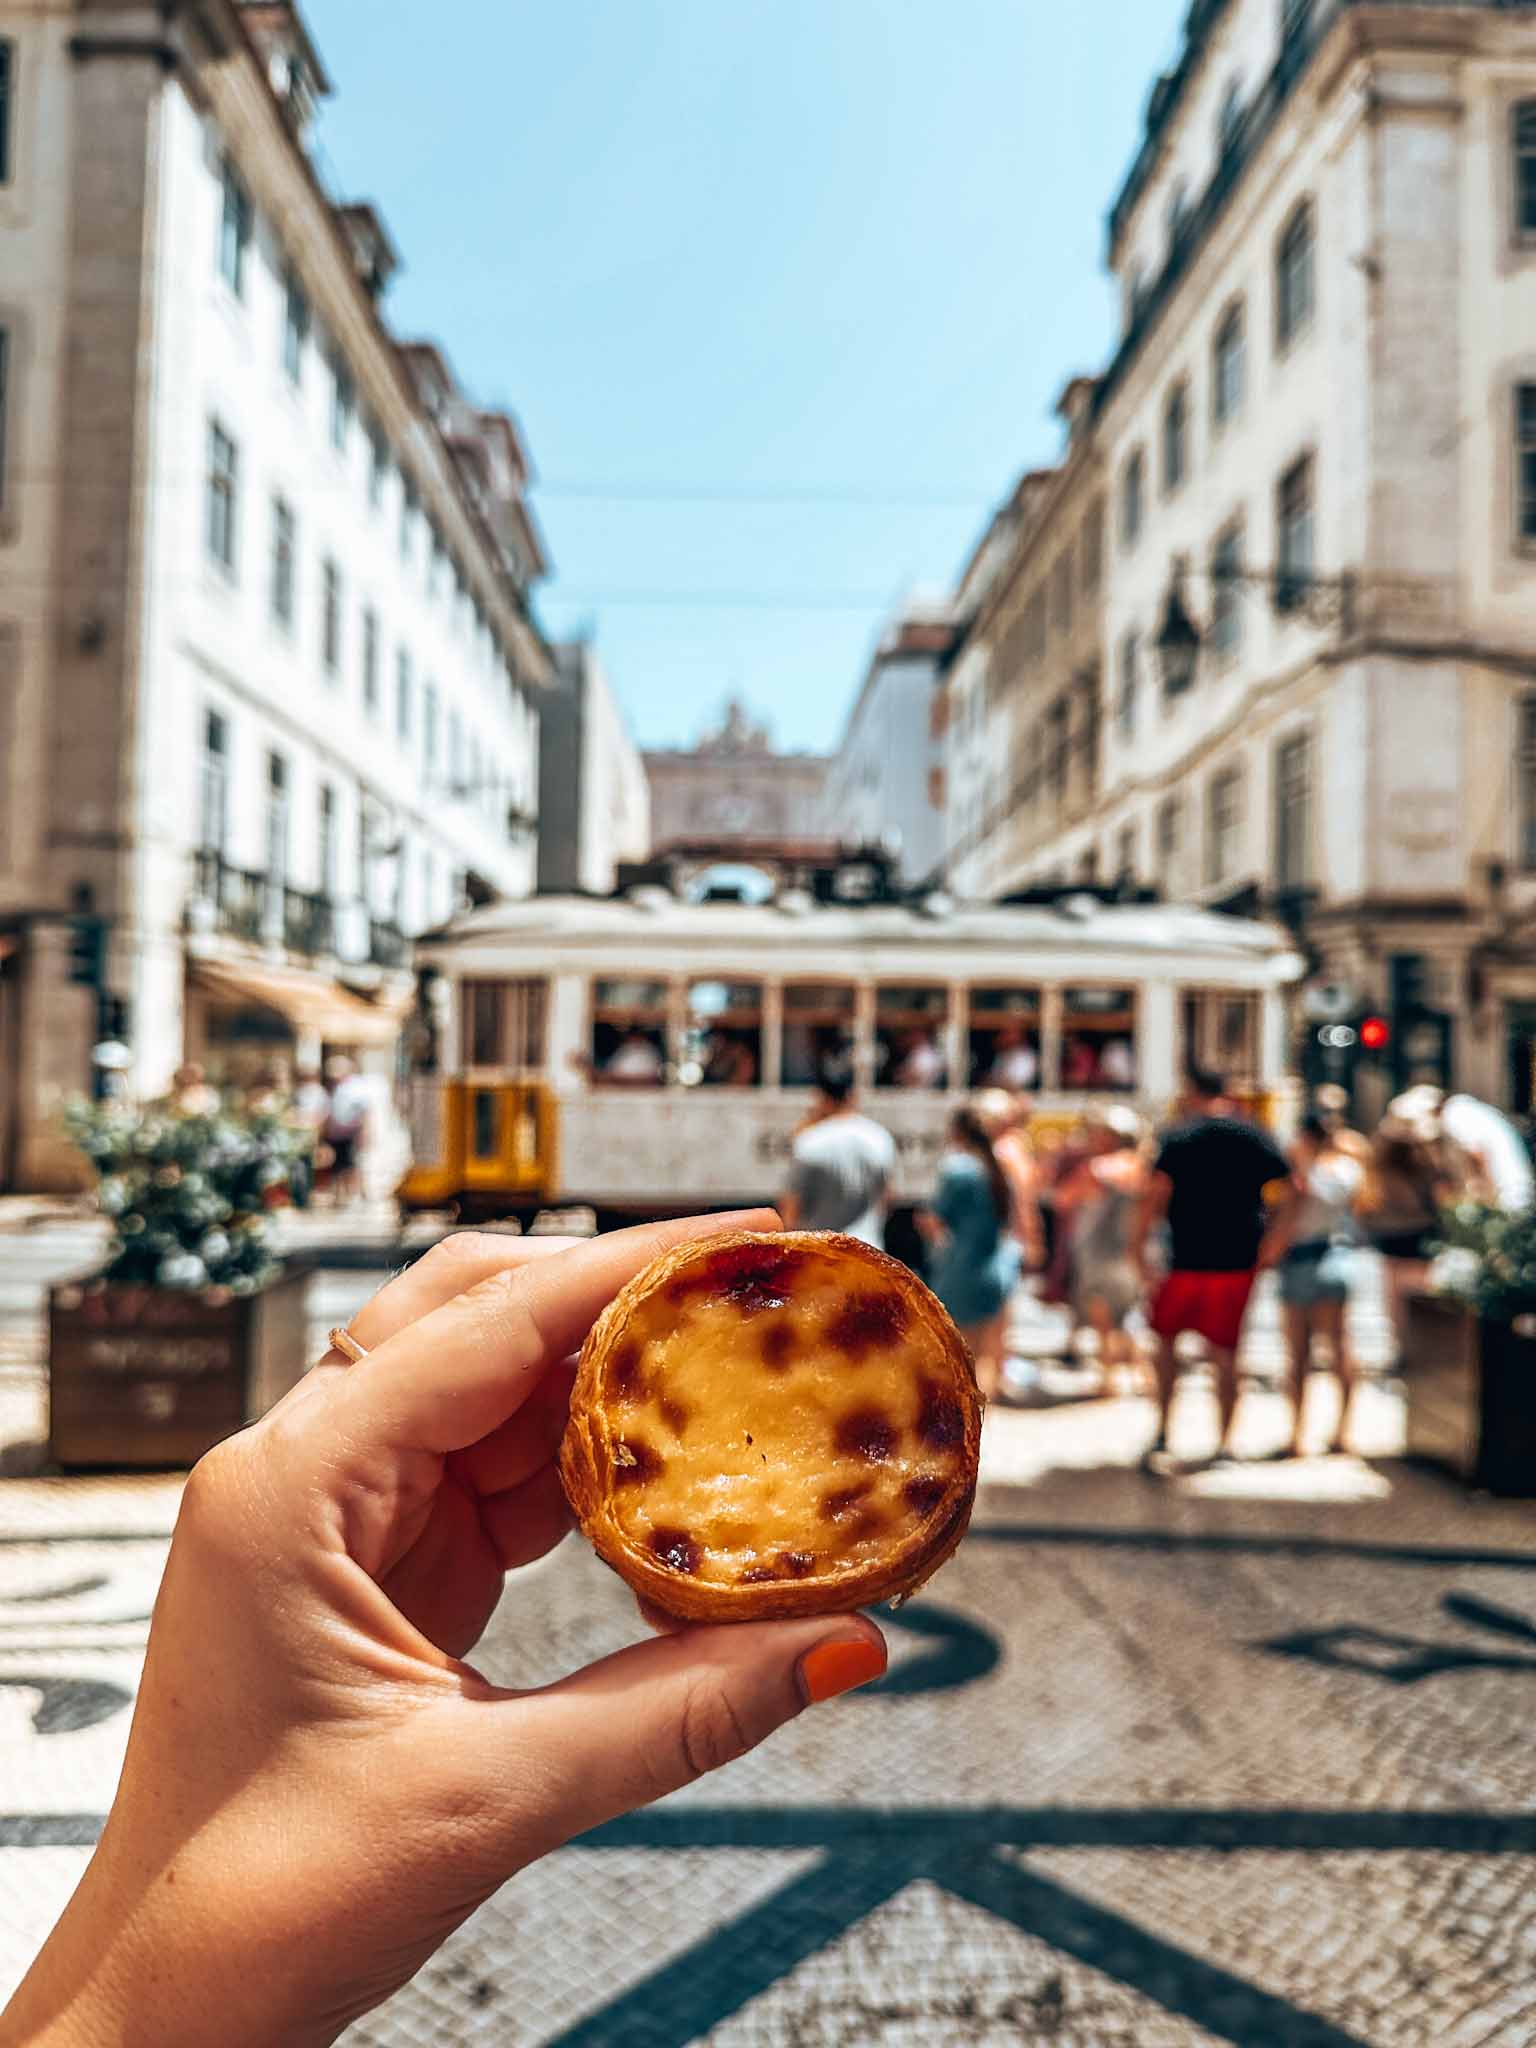 Best pastel de nata in Lisbon, Portugal - Manteigaria